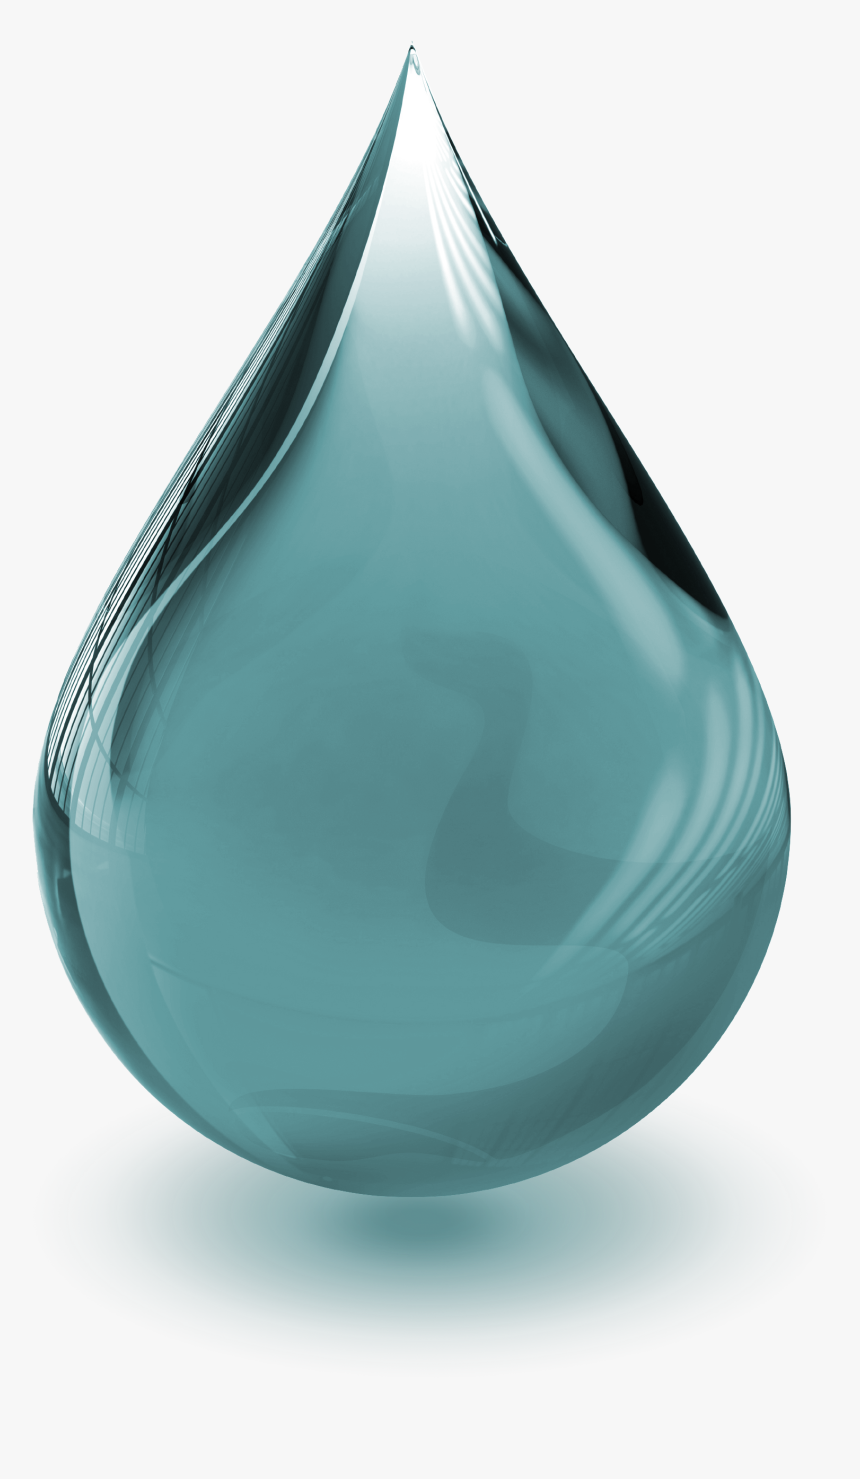 Blue Oil Drop Png, Transparent Png, Free Download